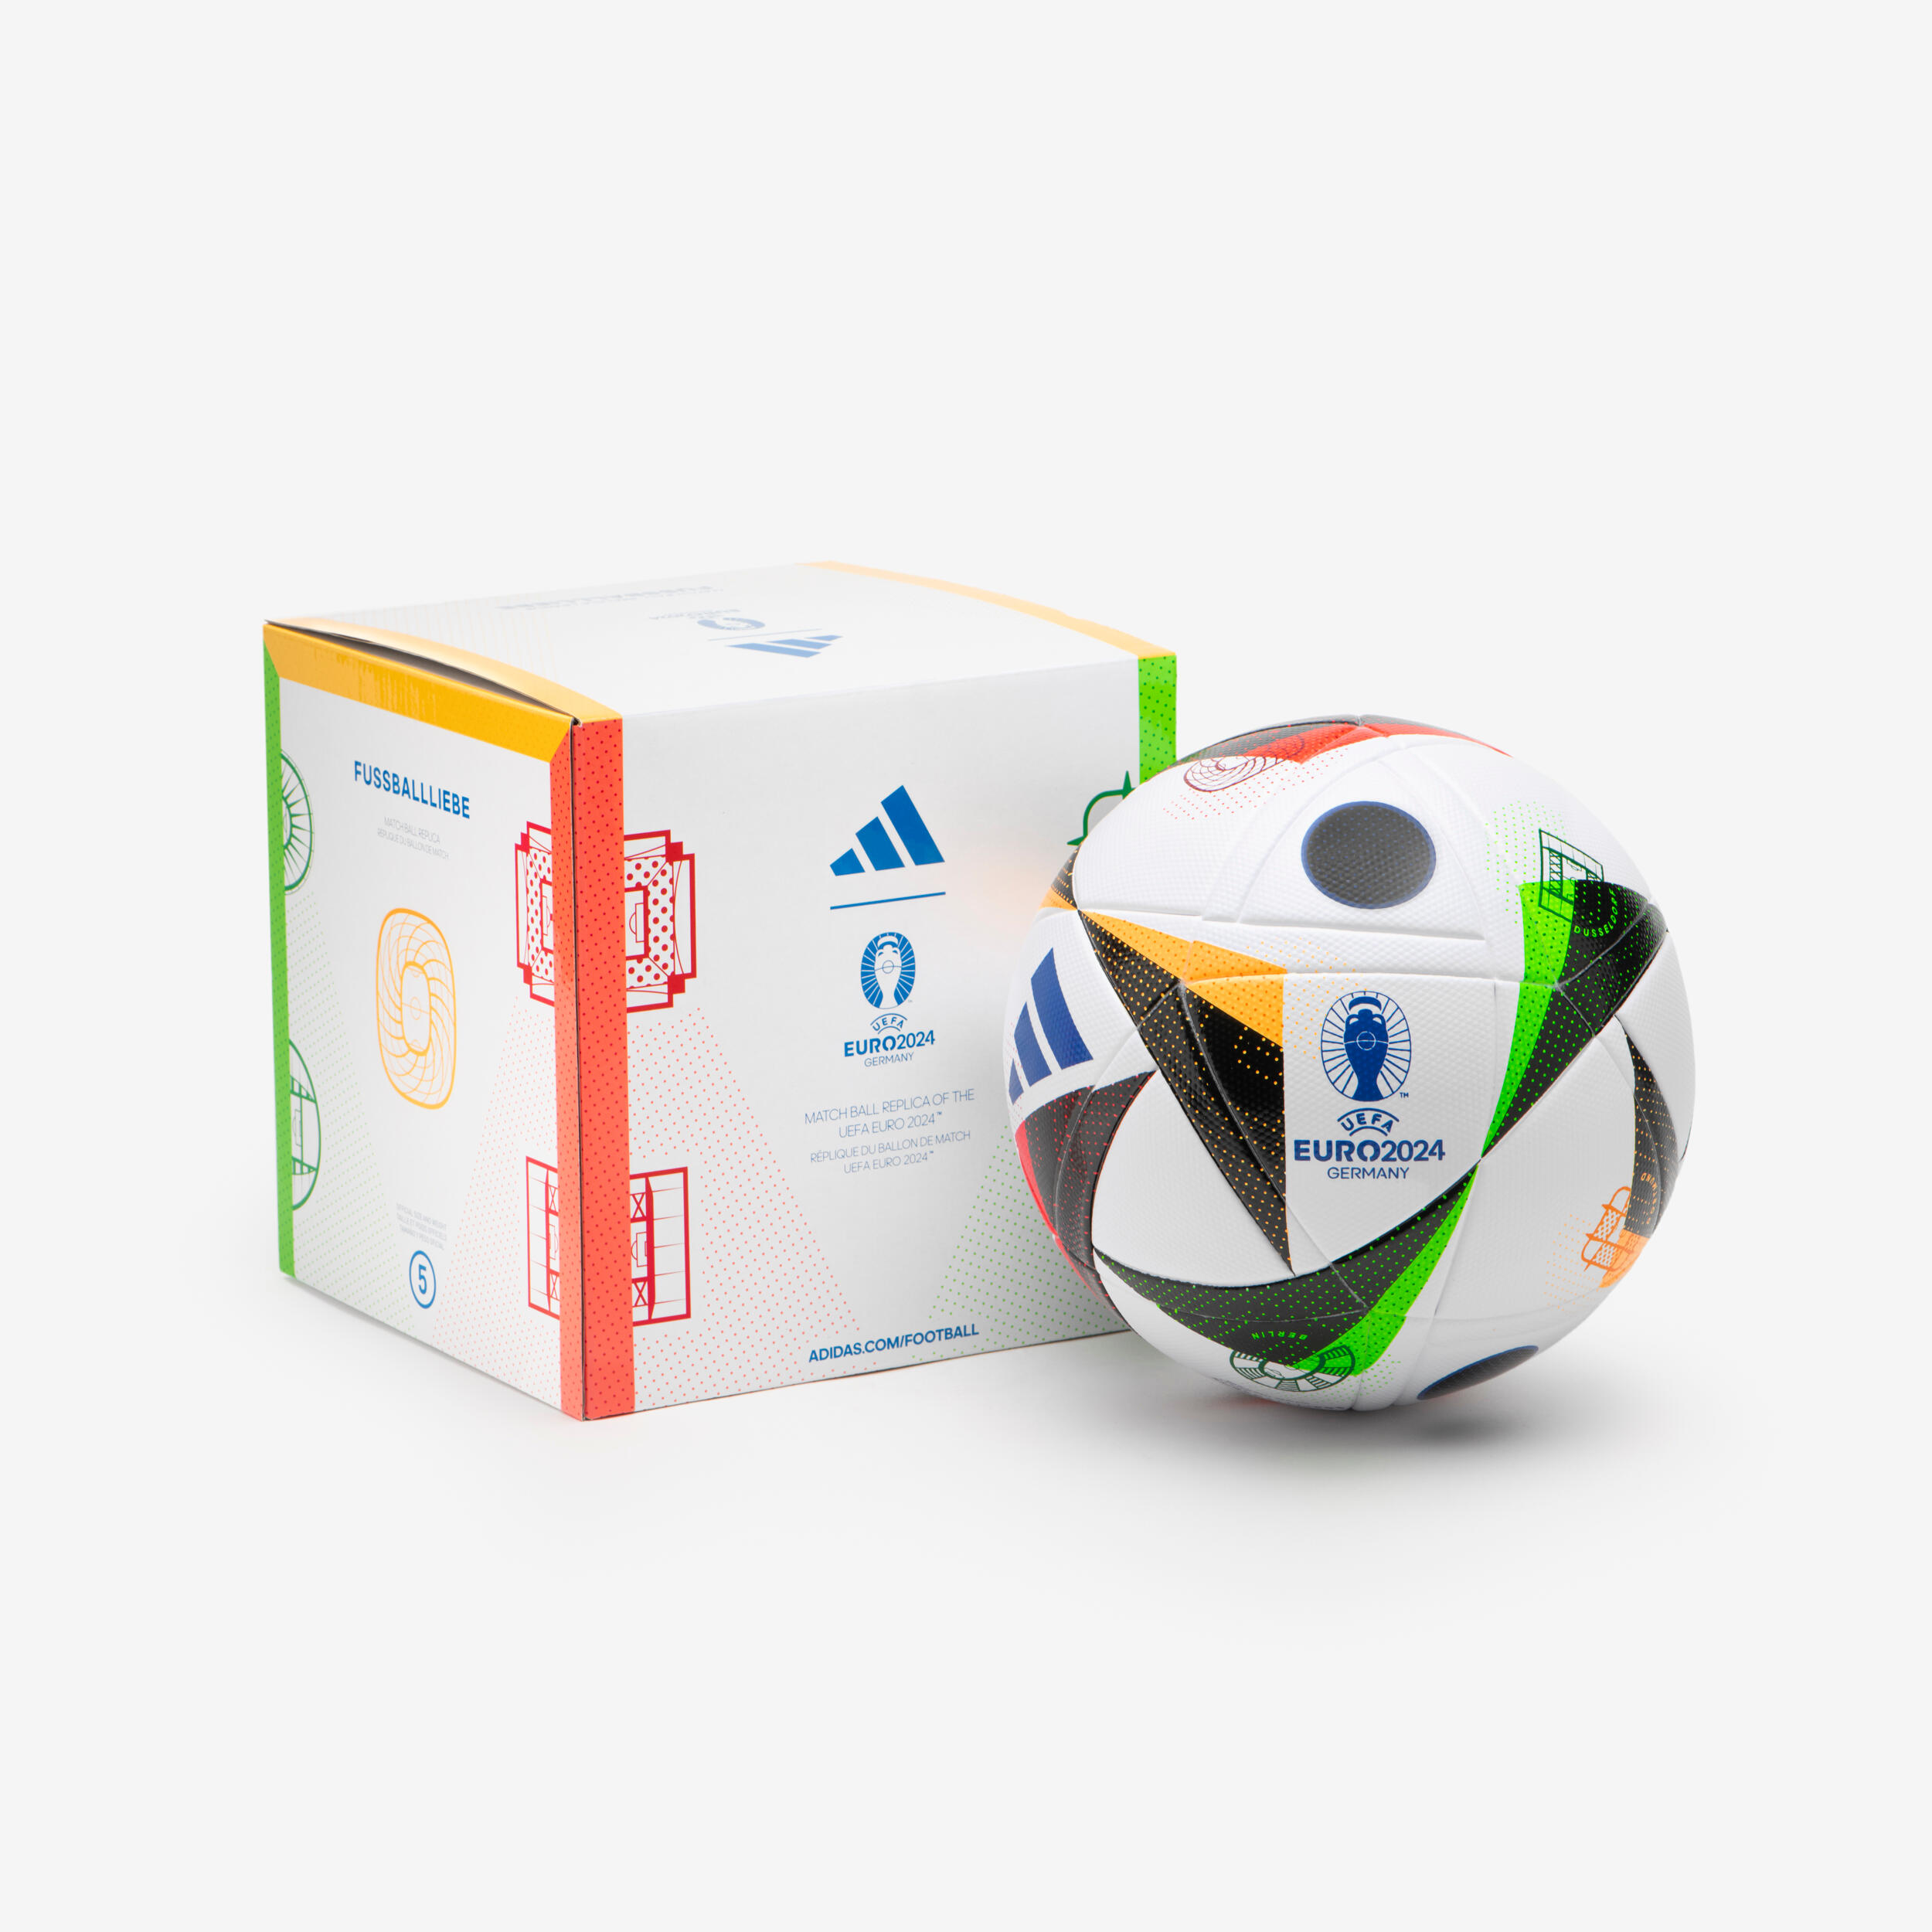 Minge fotbal ADIDAS Replică Euro 24 Fussballliebe League box